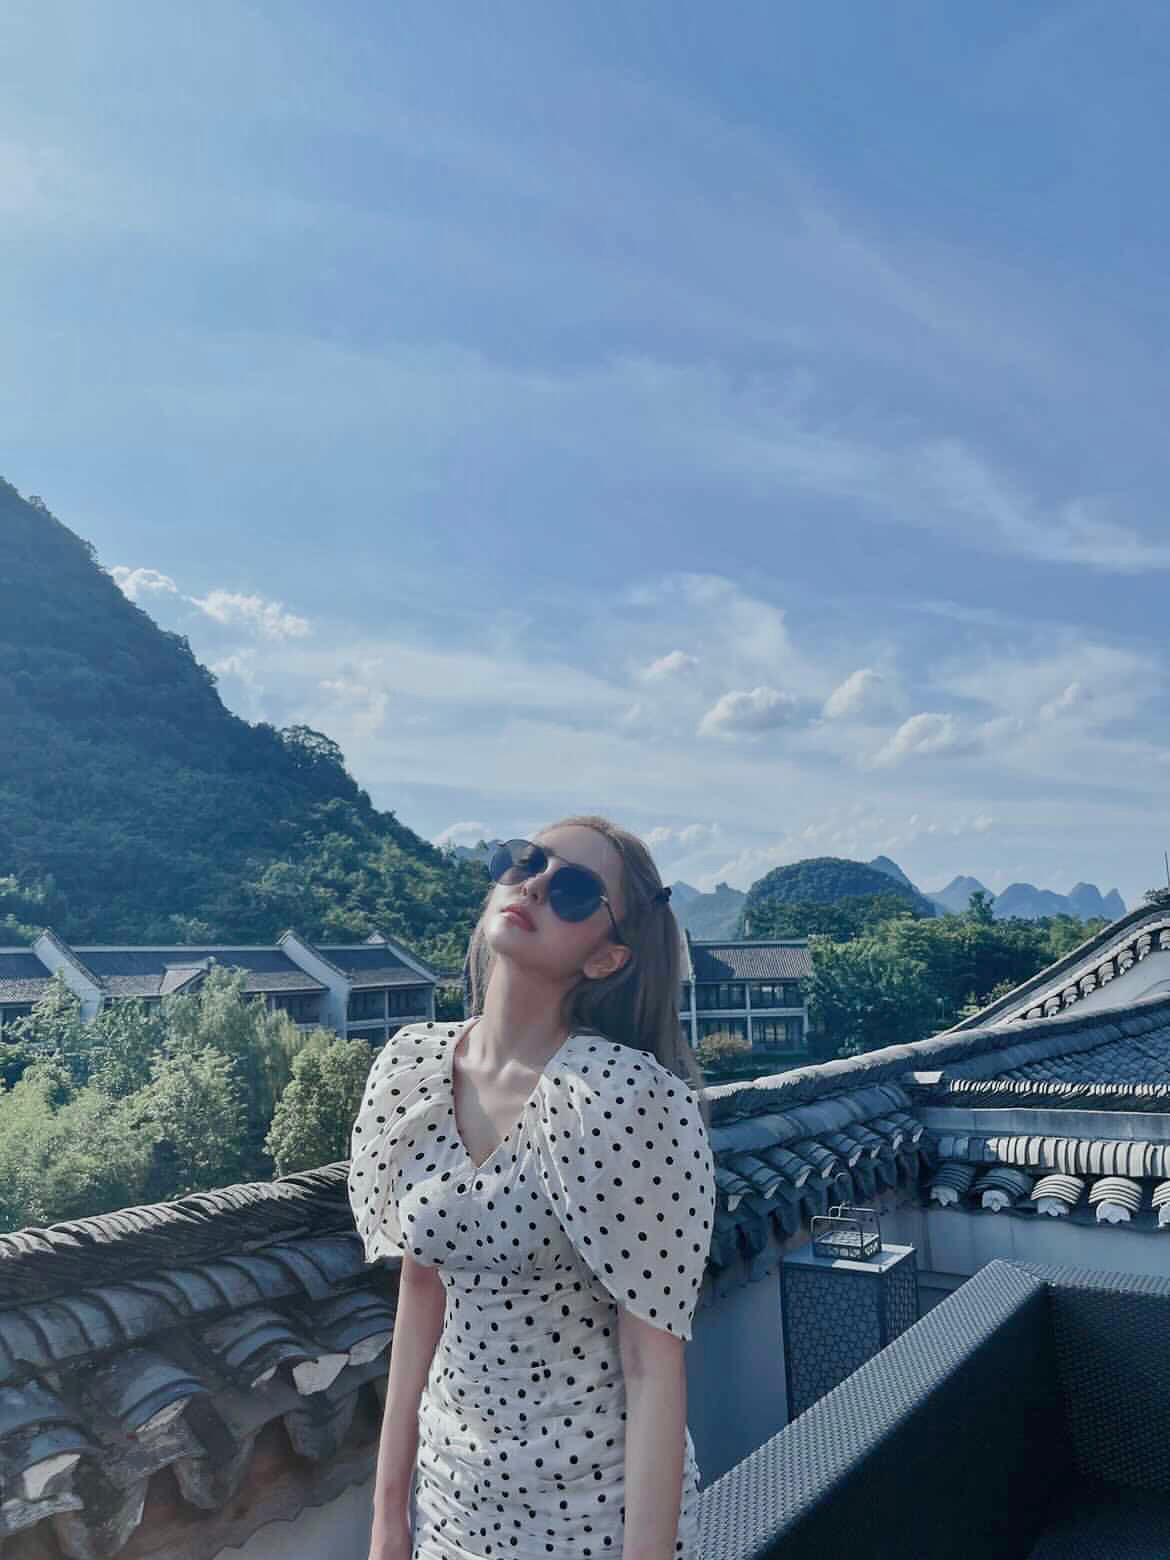 Grace Chow wearing REVE x HANSHSU sunglasses